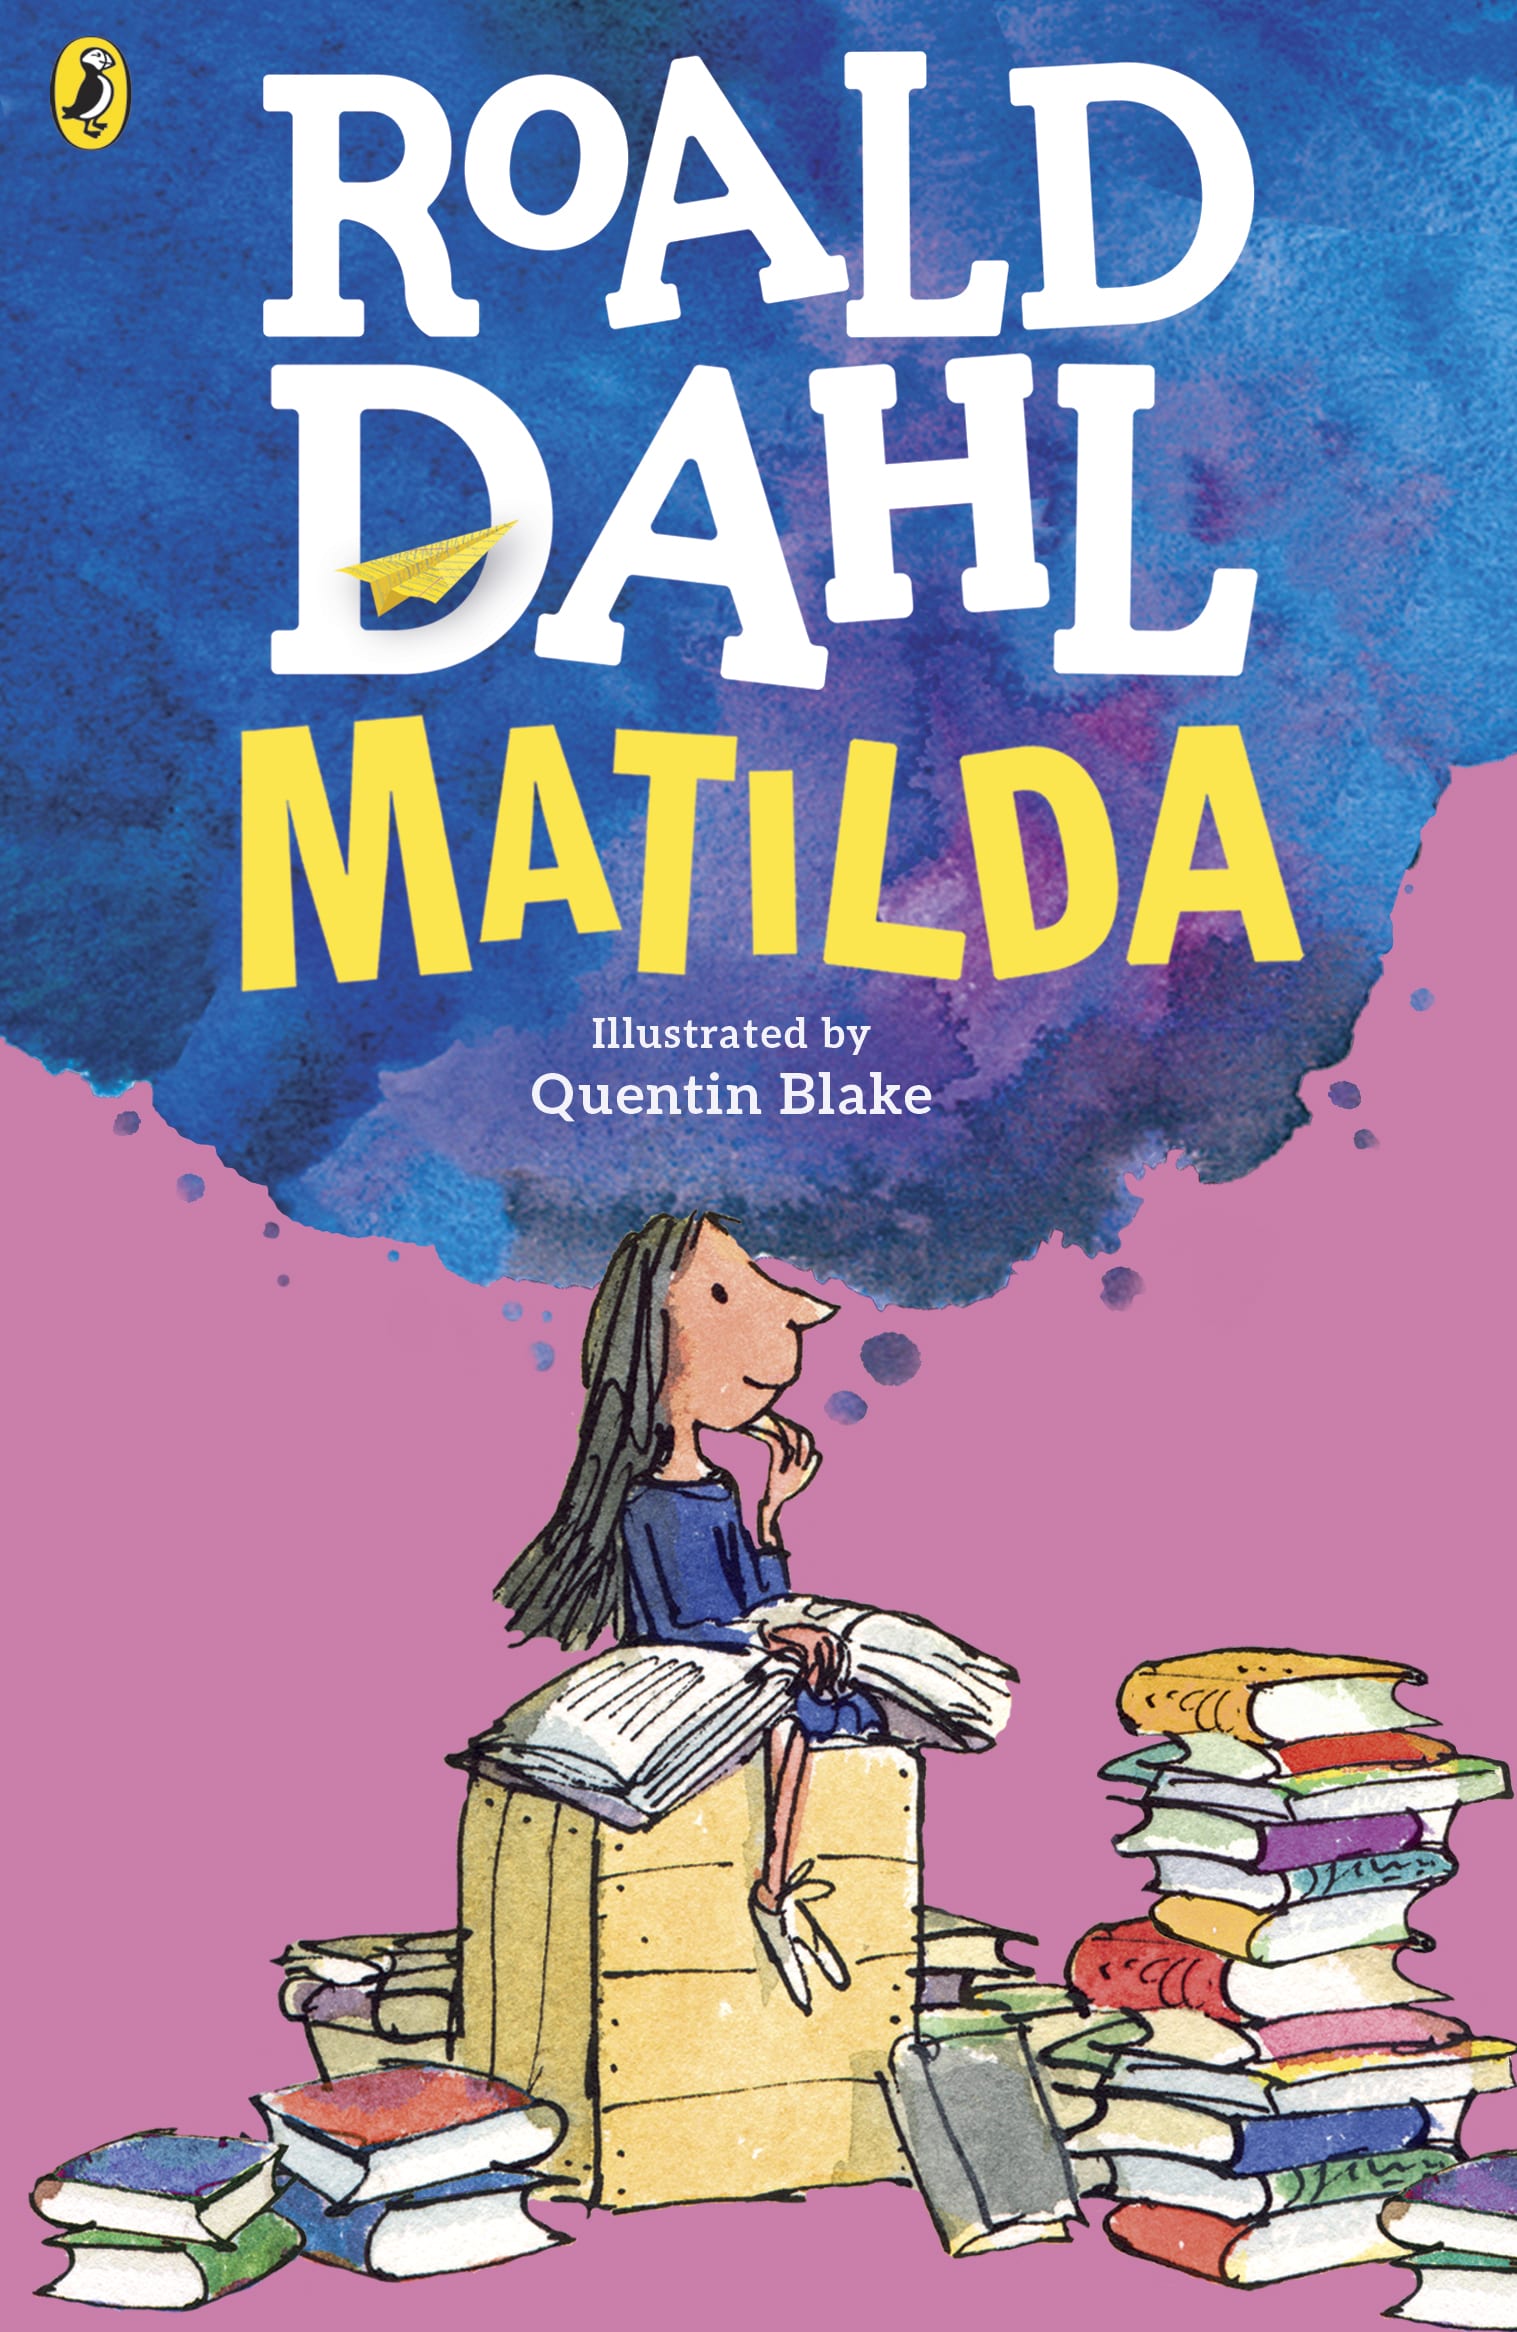 Matilda. Roald Dahl. 1988.